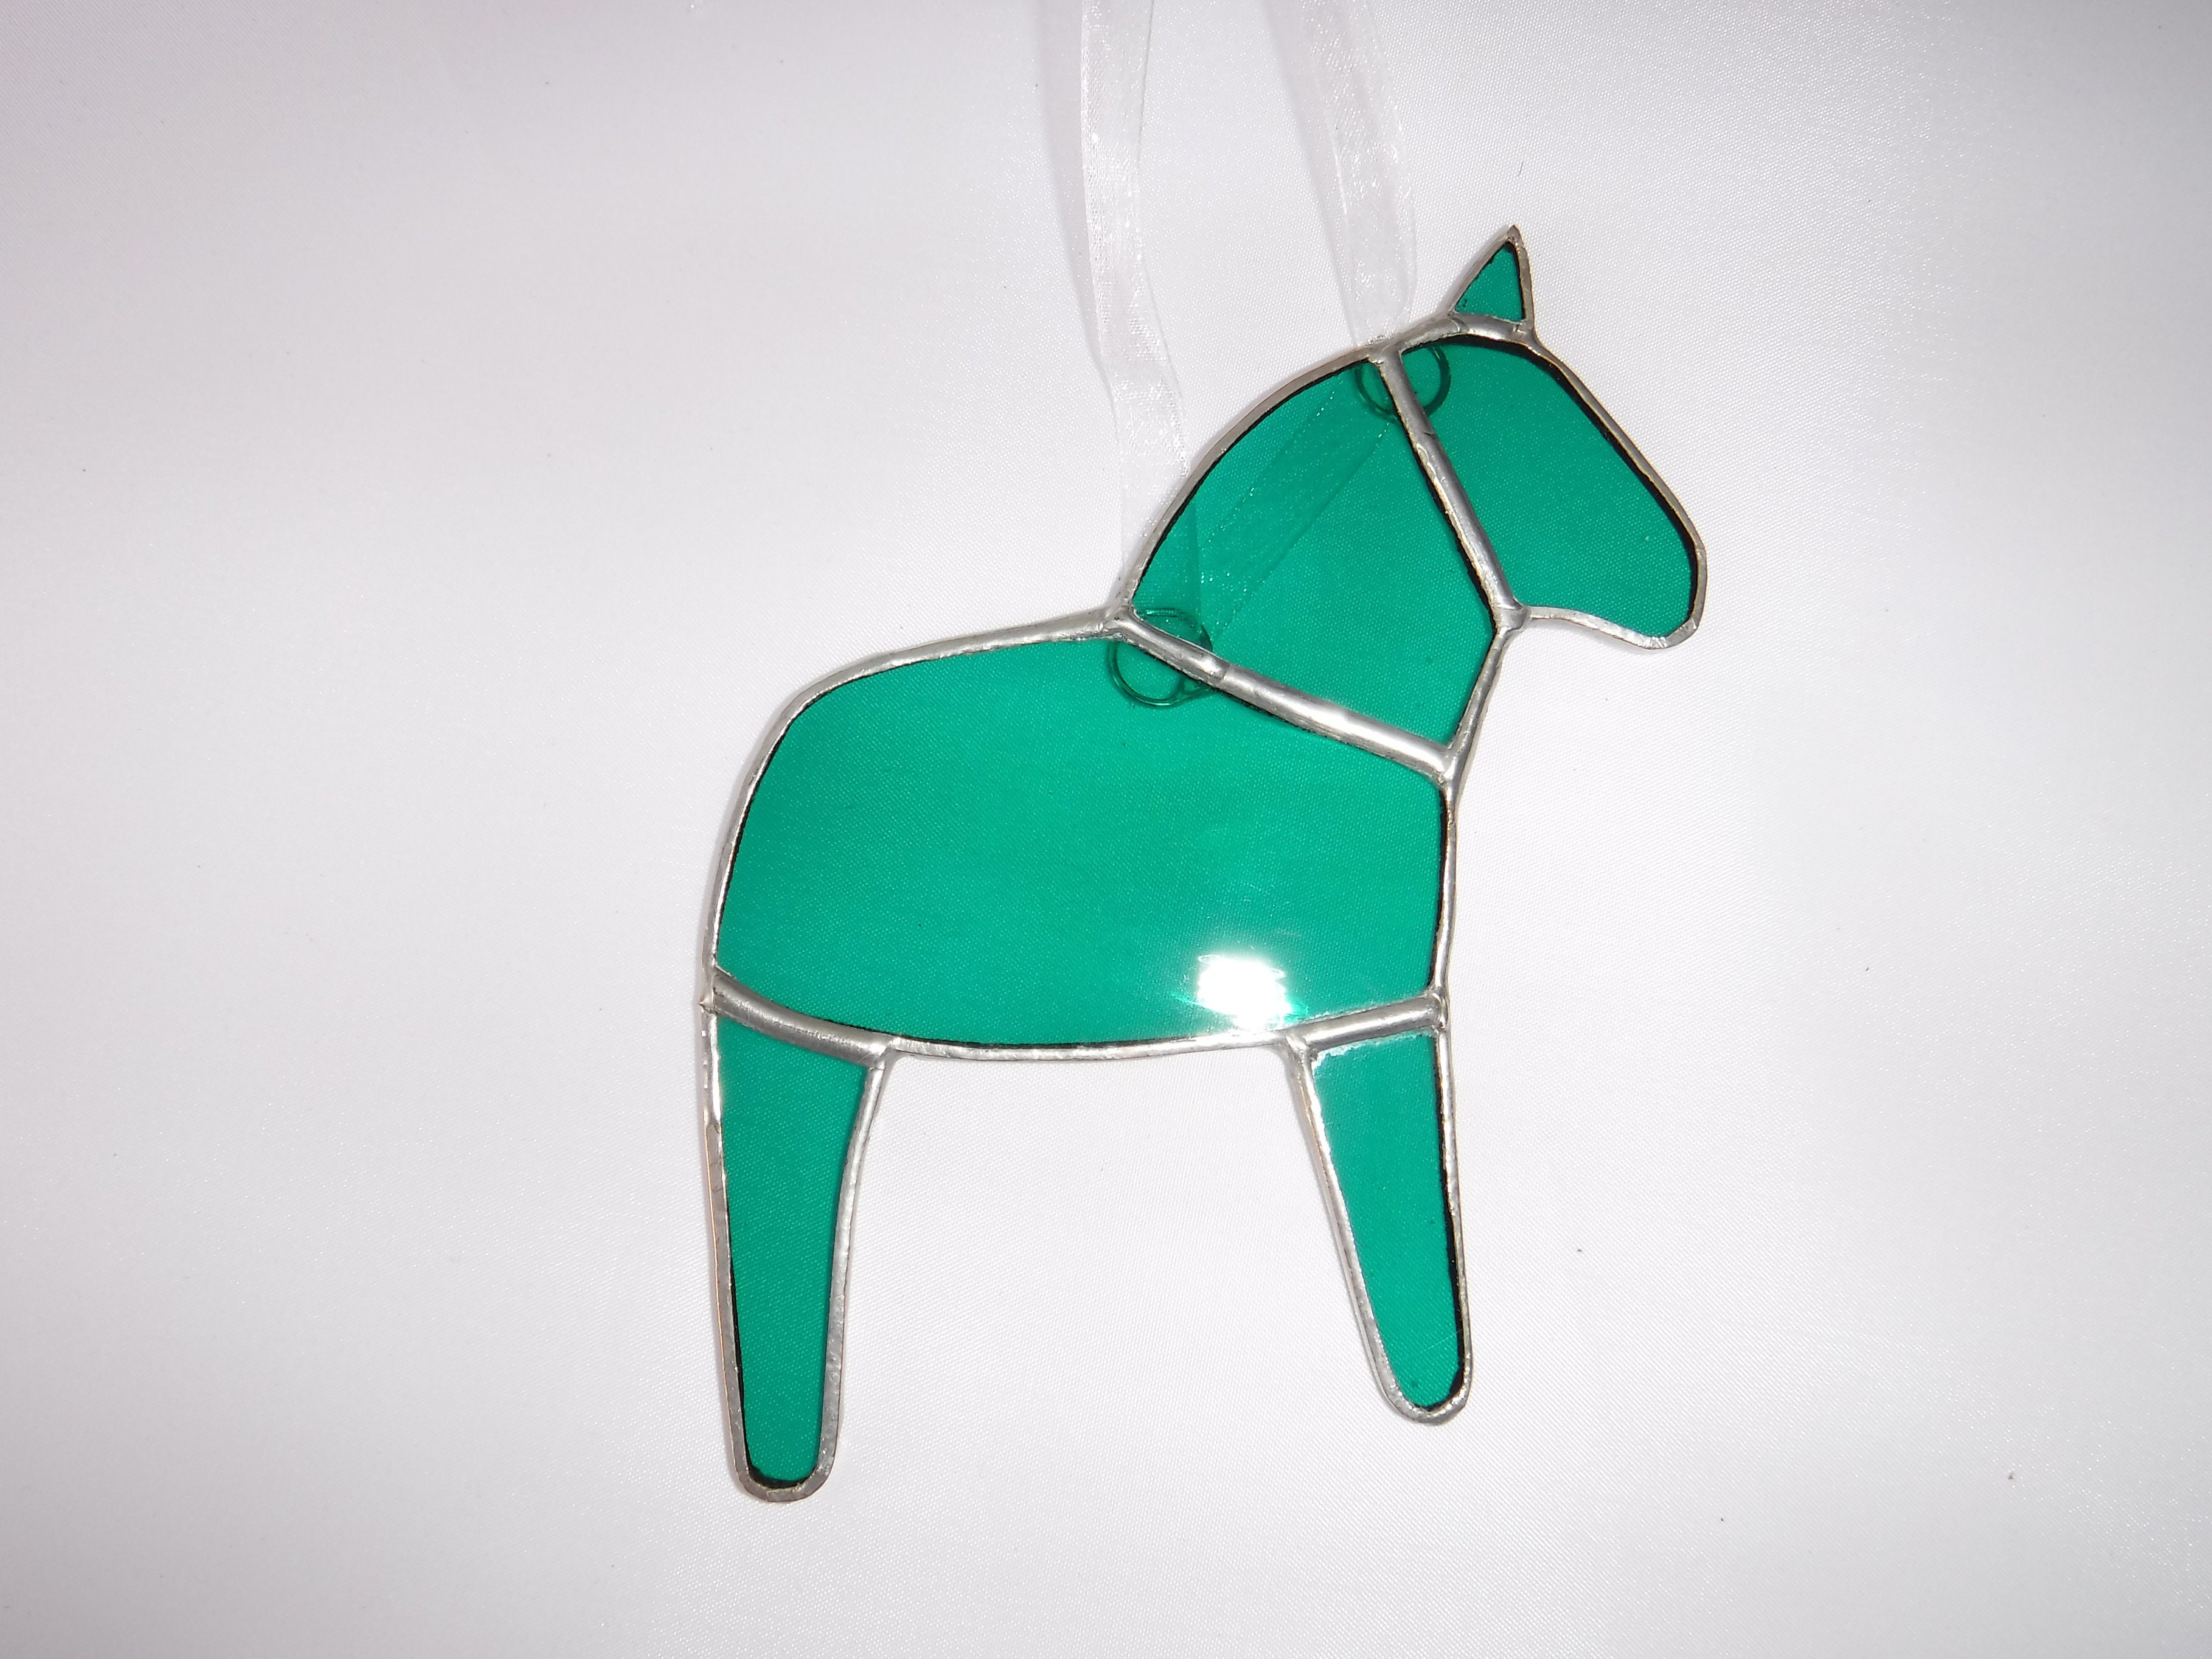 Dala Horse Ornament — SHIELDMAIDEN'S SANCTUM